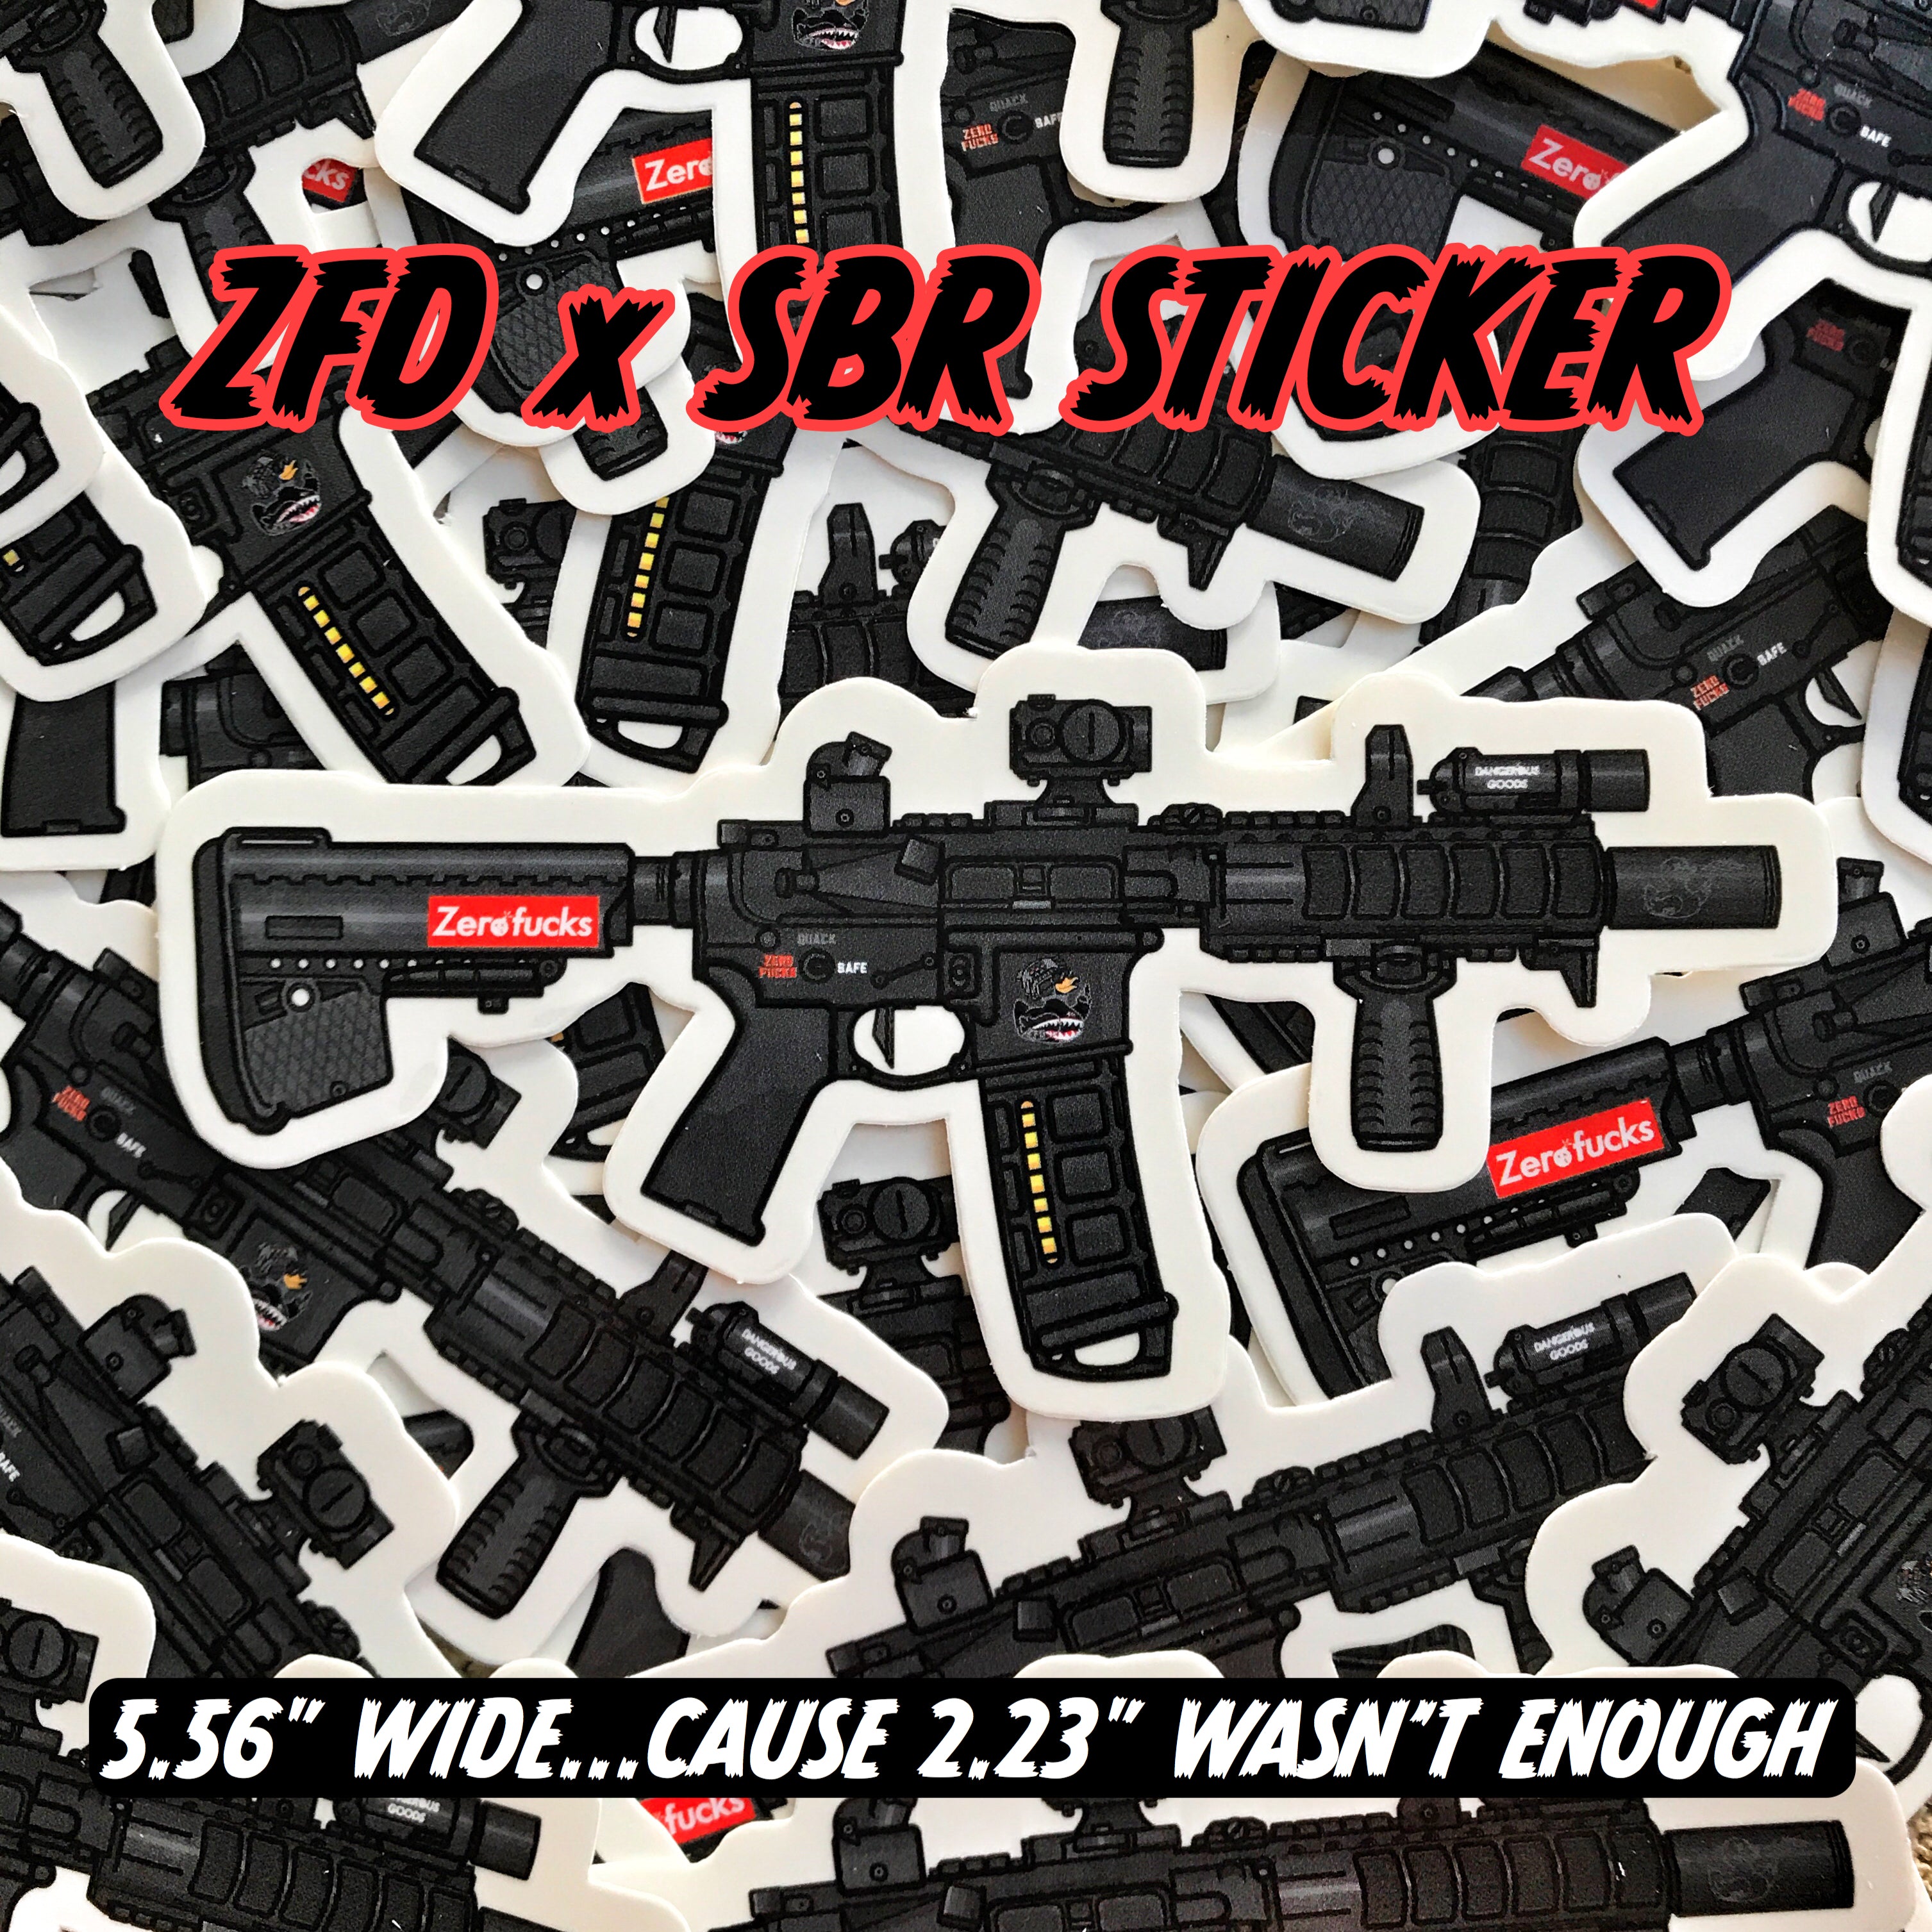 ZFD X Dangerous Goods 5.56” SBR Sticker - Black